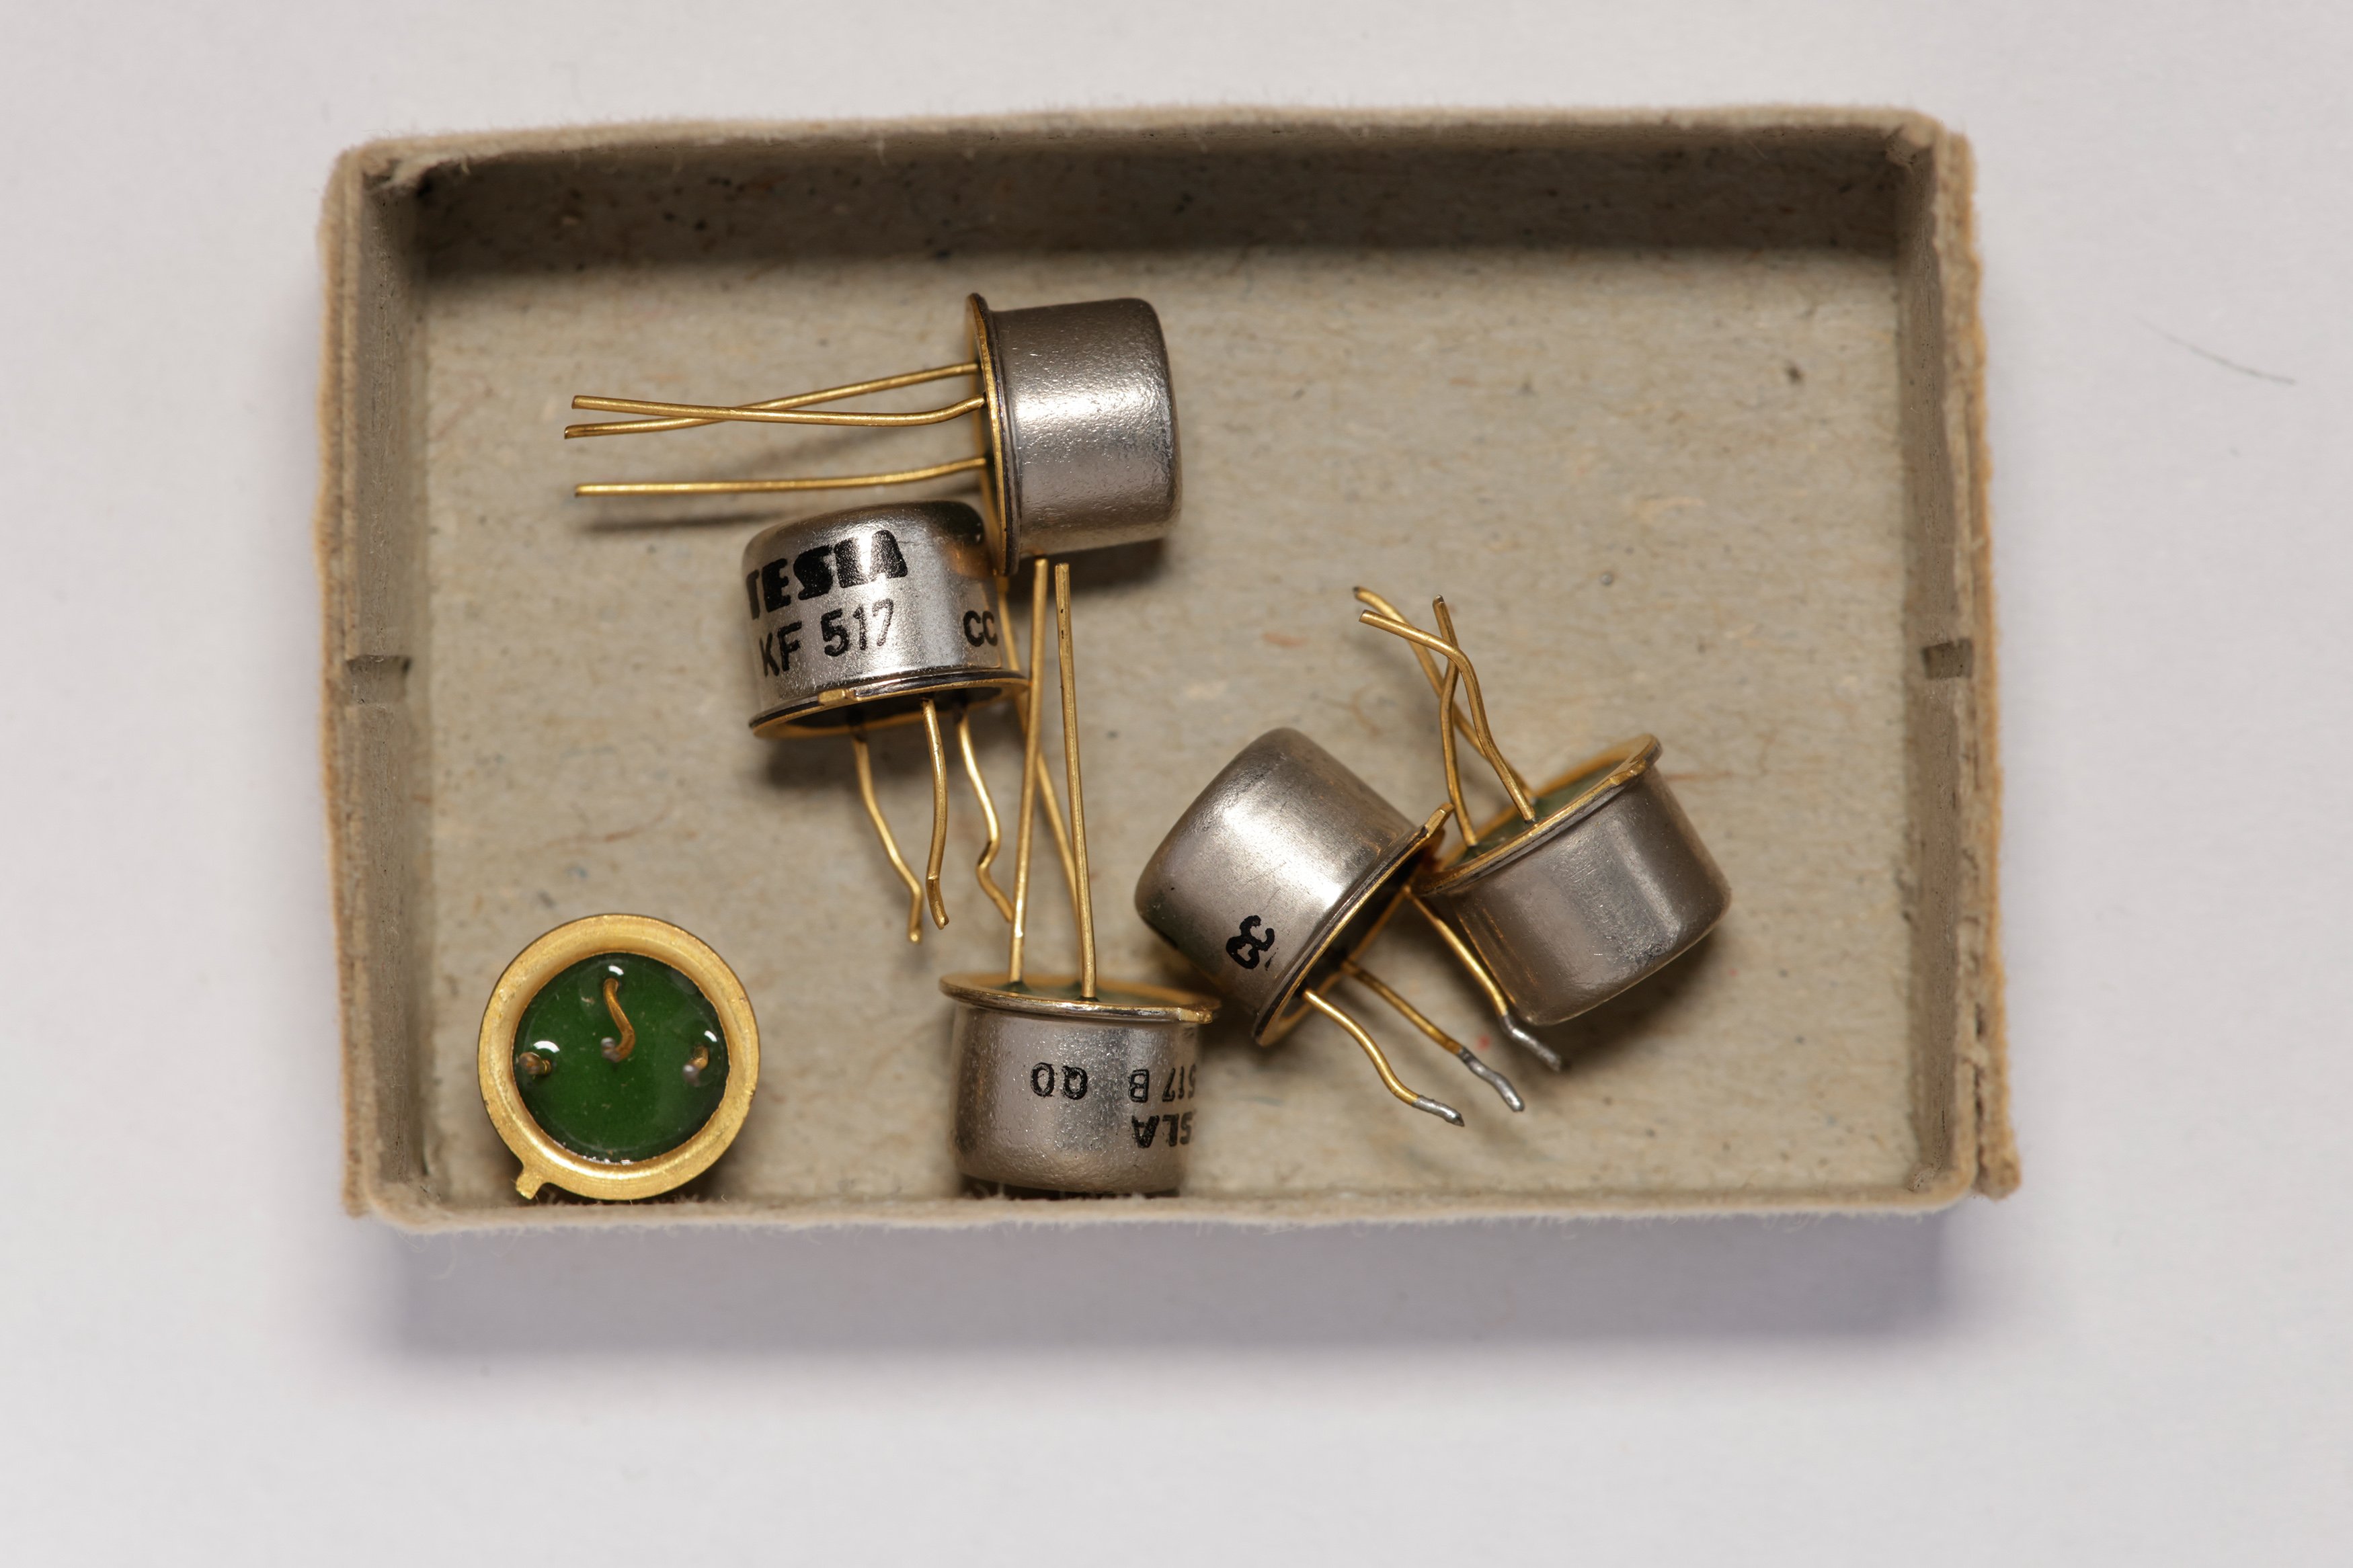 Transistor KF 517 (ZCOM Zuse-Computer-Museum CC0)